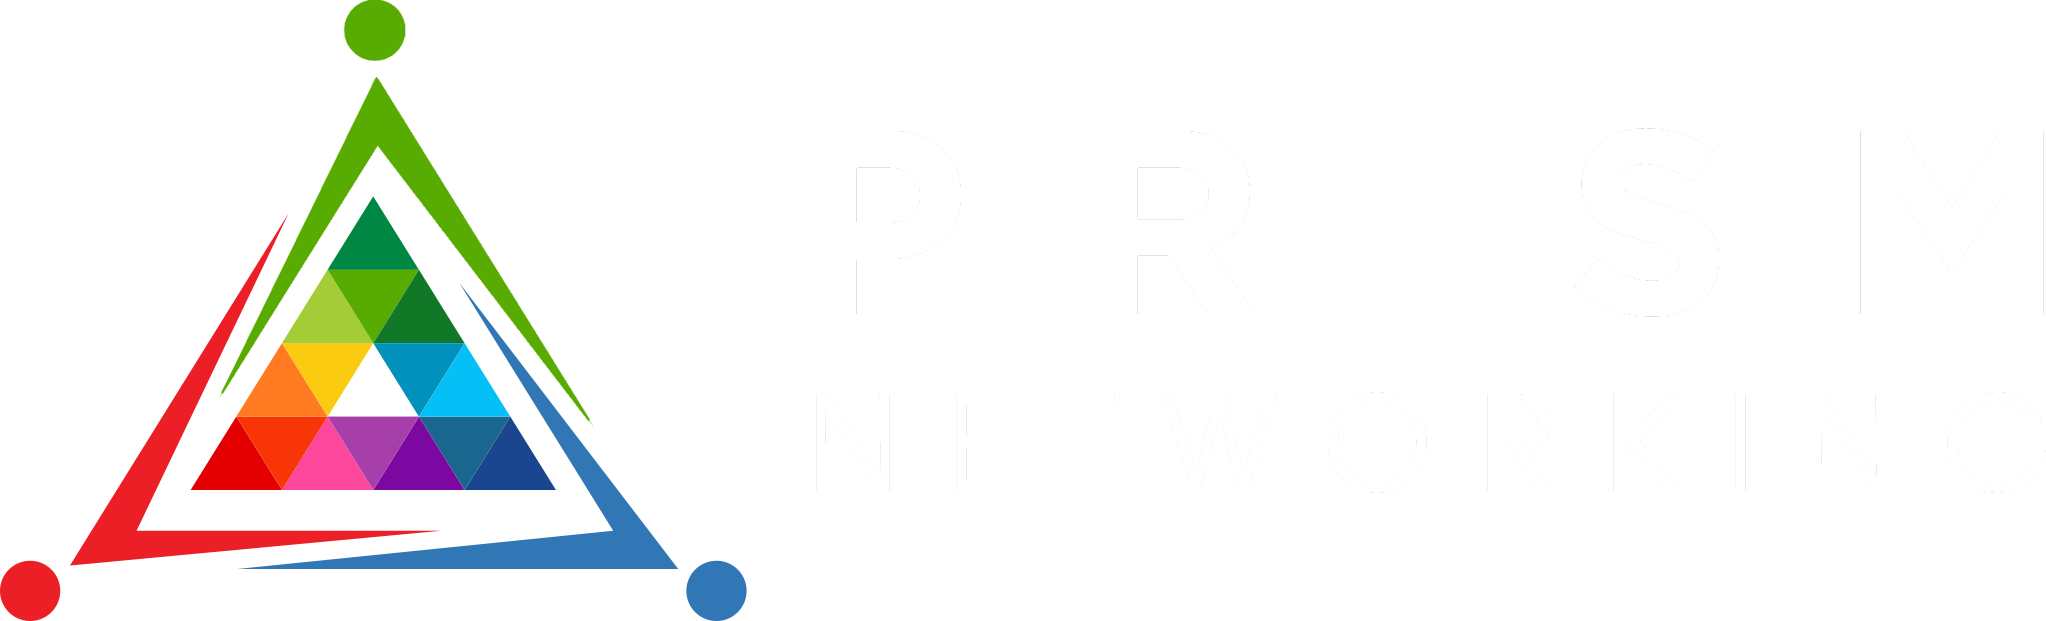 PRISM Networking Logo - White text